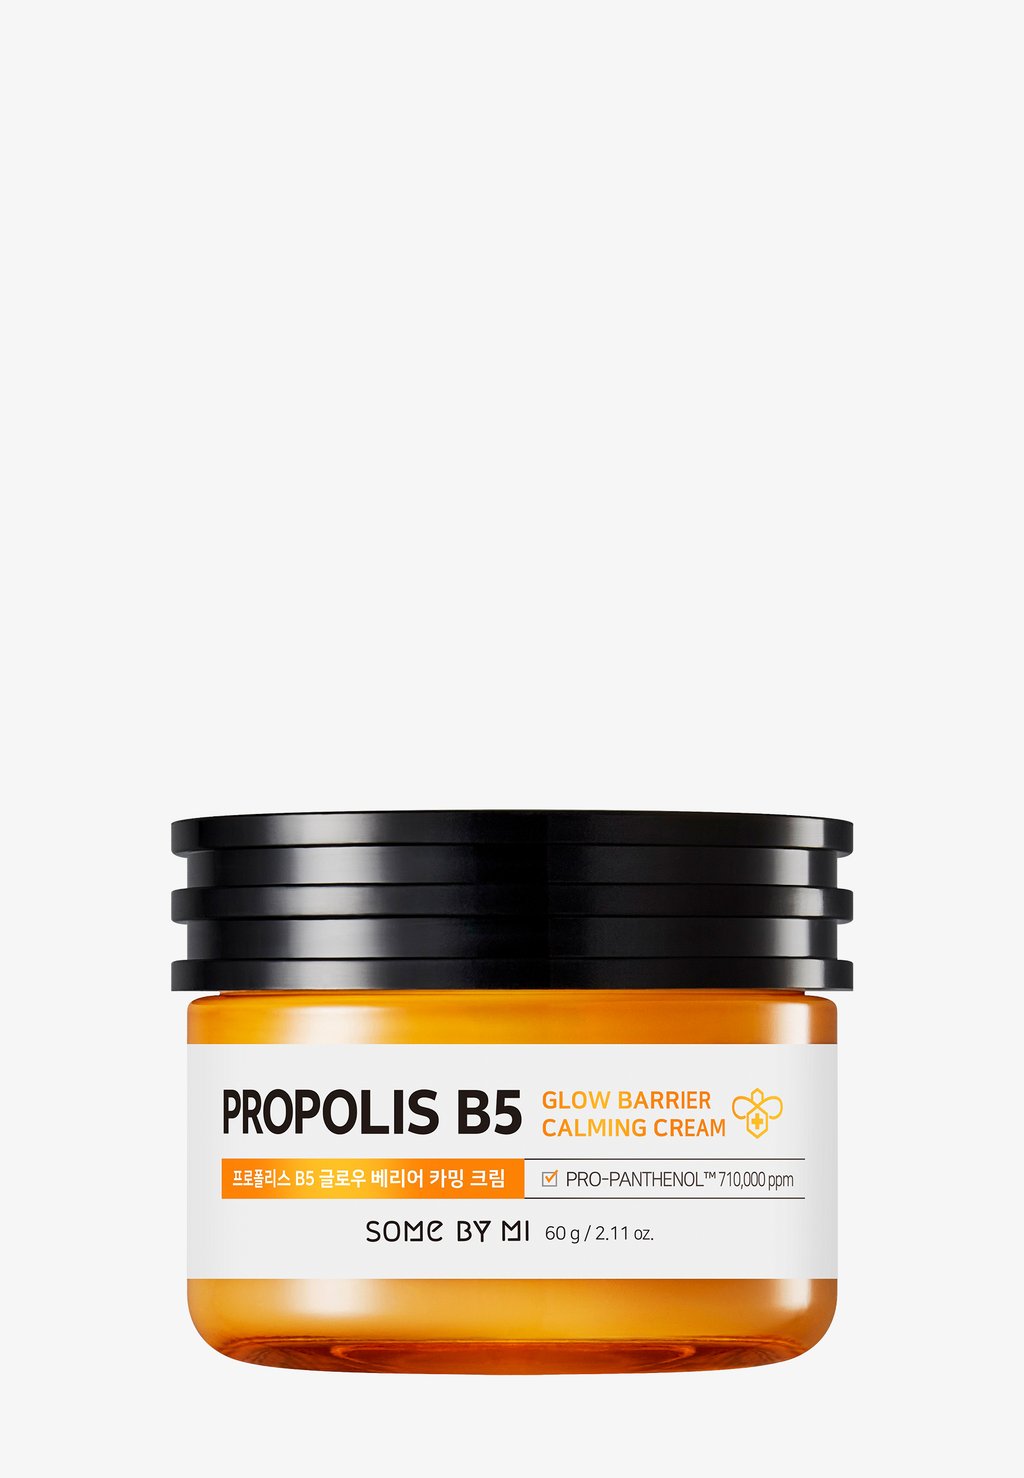 Дневной крем Propolis B5 Glow Barrier Calming Cream SOME BY MI some by mi propolis b5 glow barrier calming starter kit